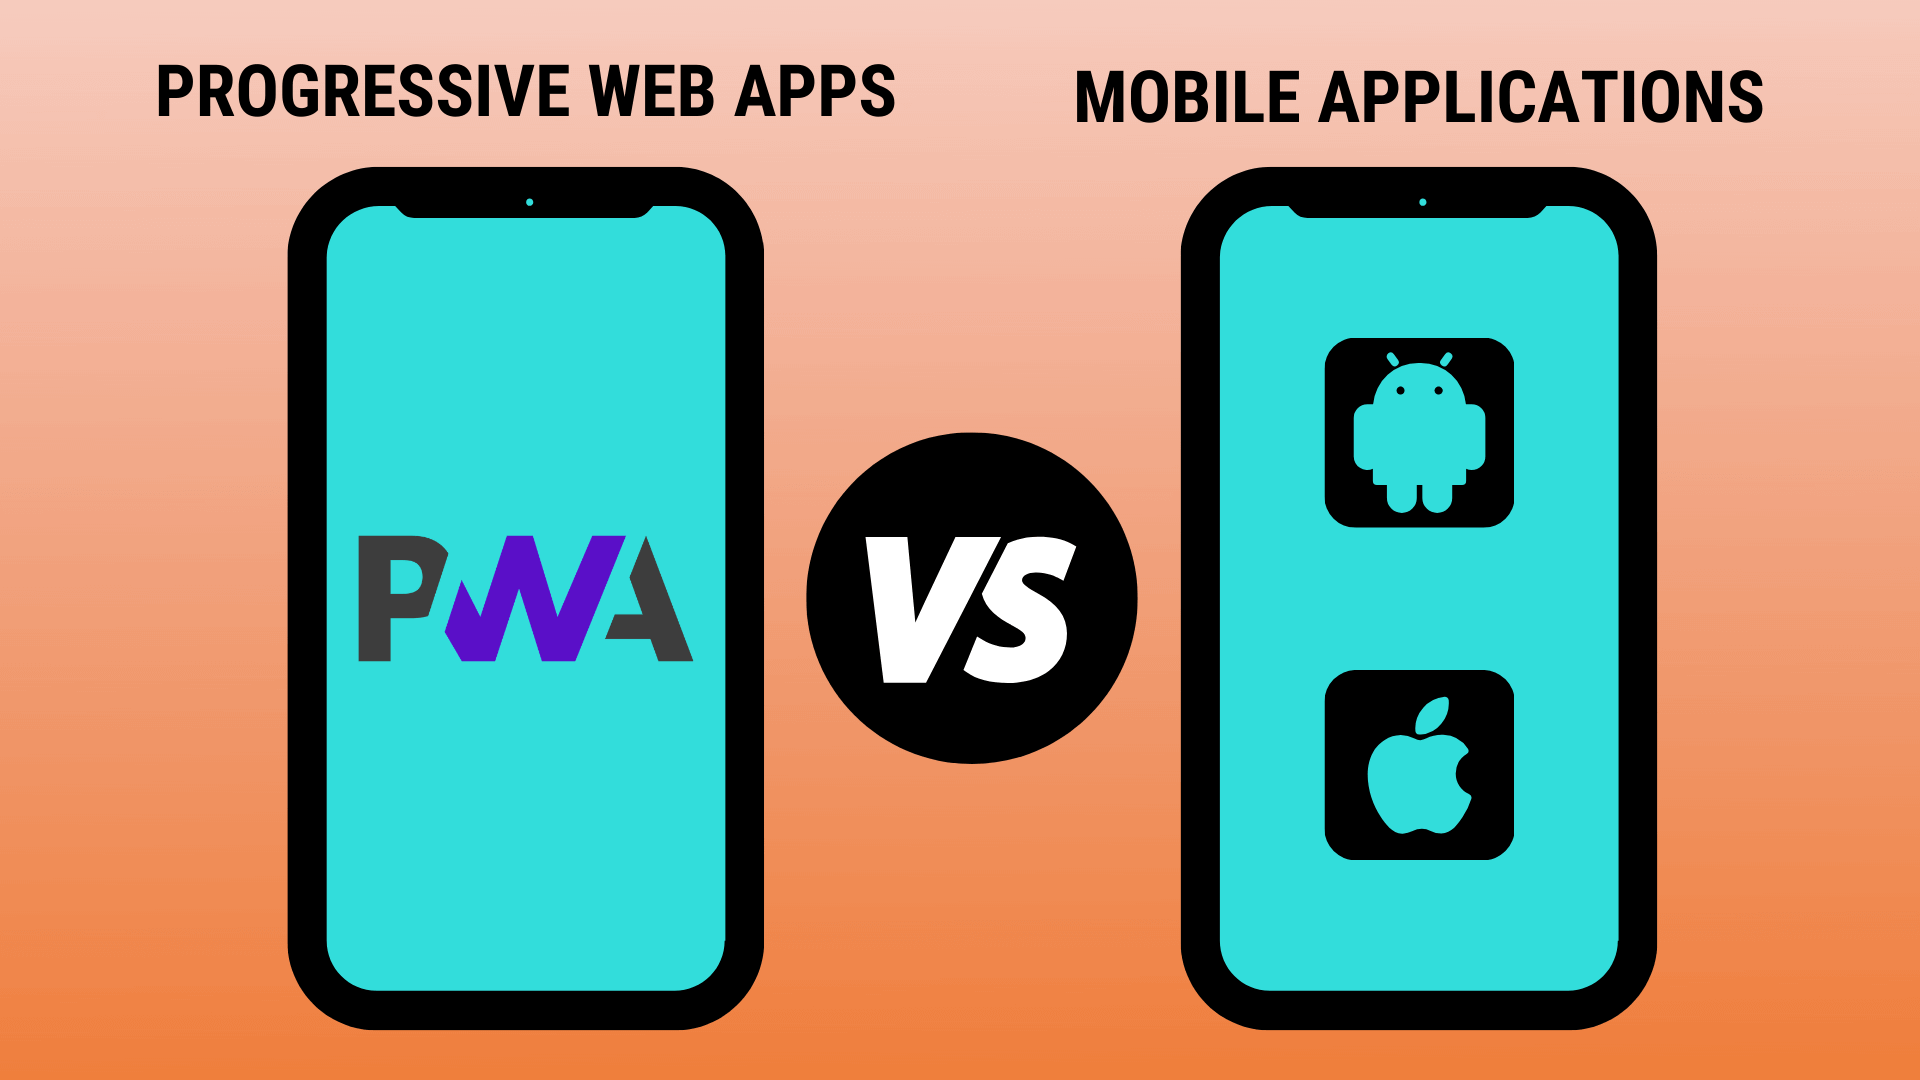 PWA VS Mobile Applications